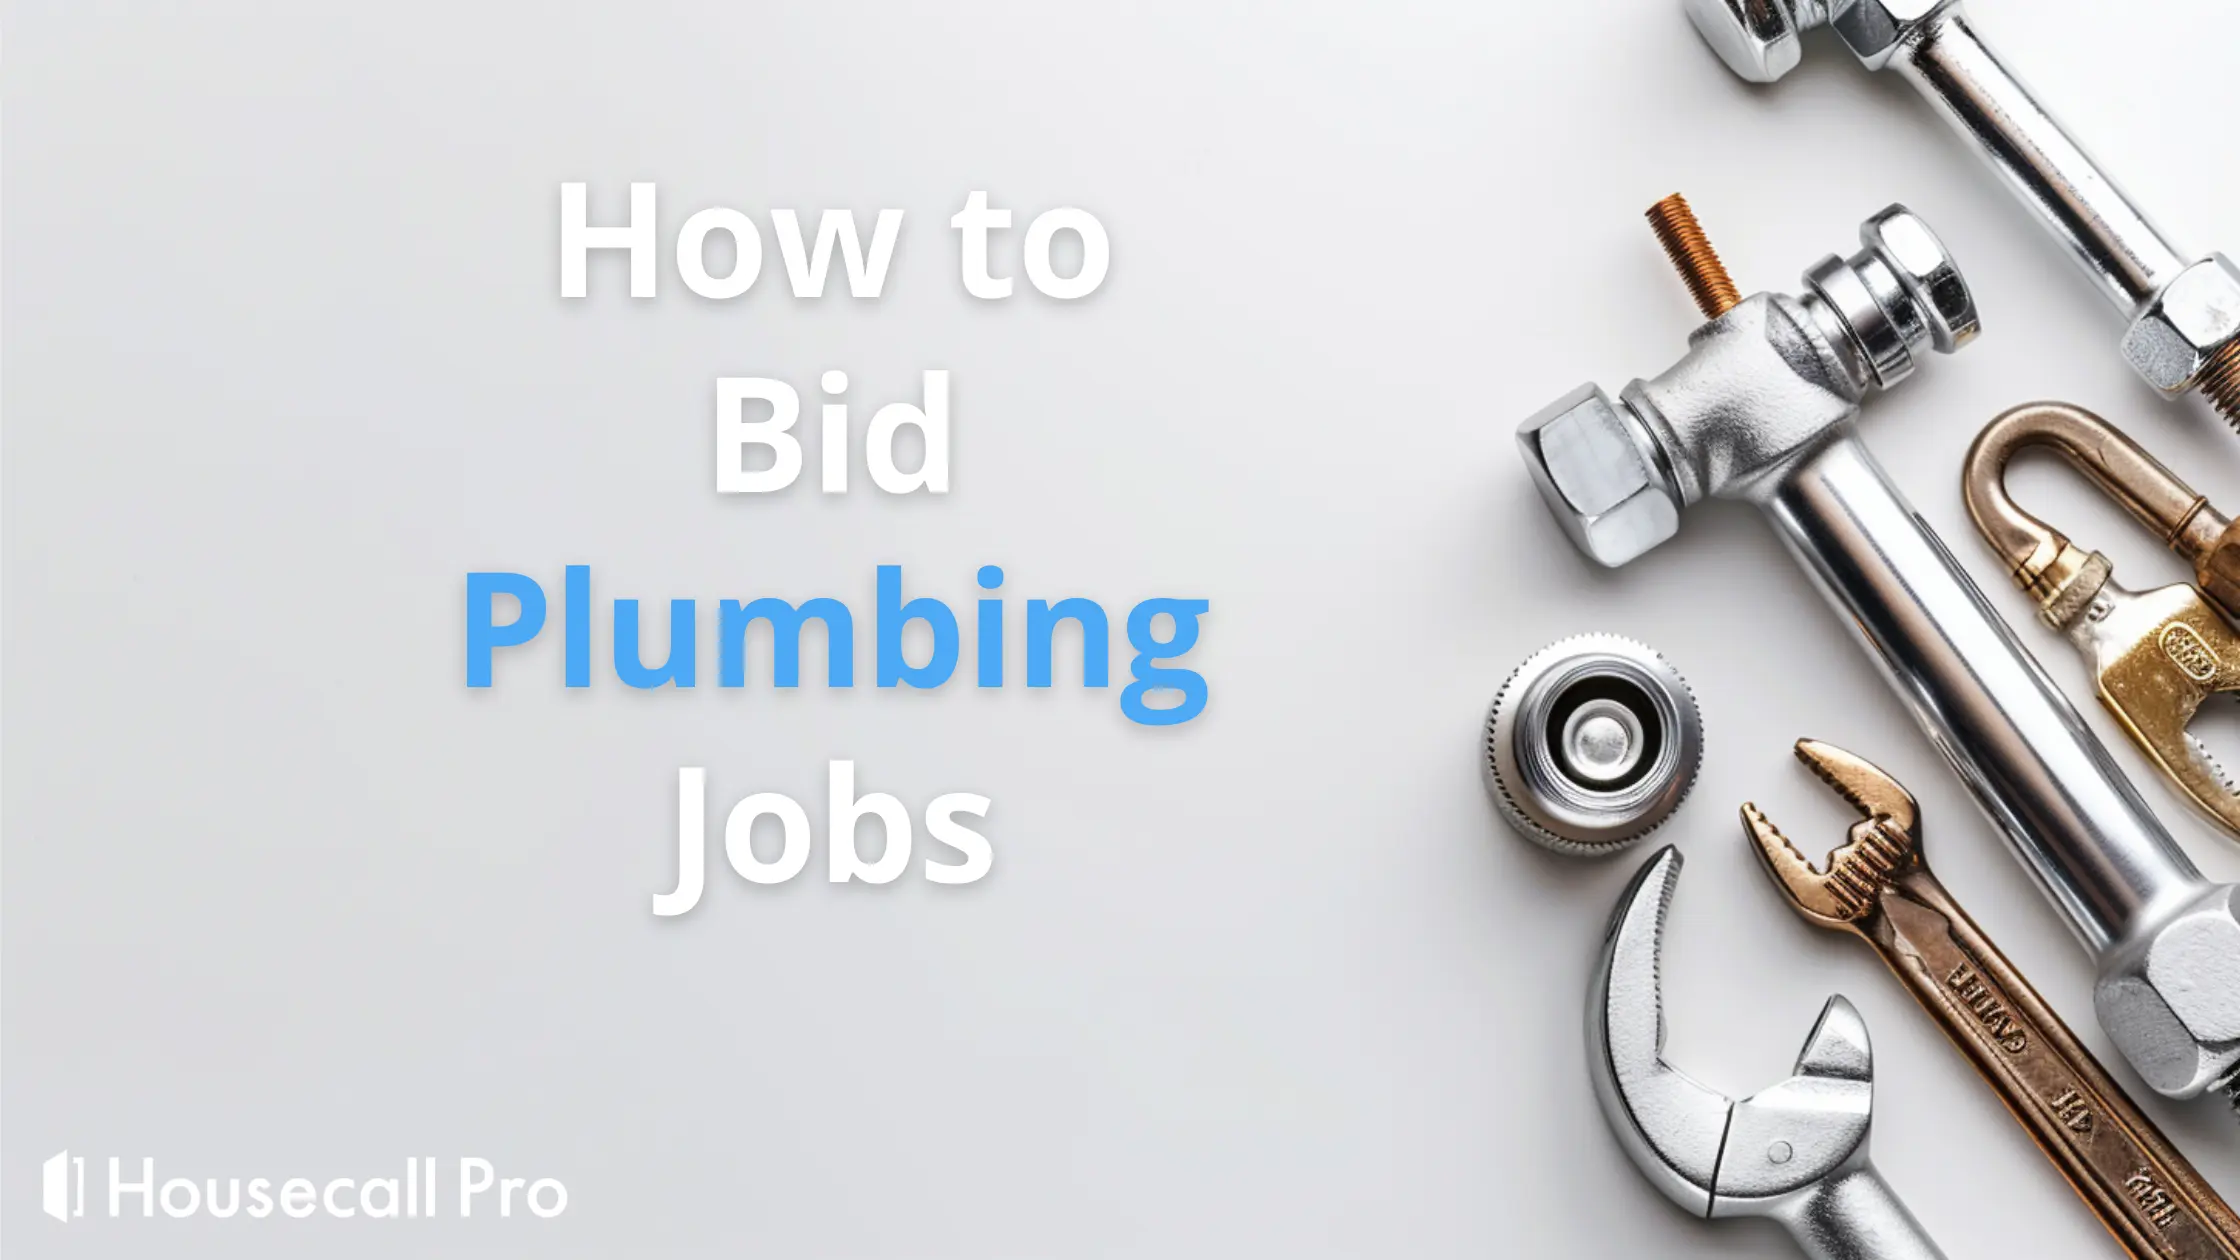 How to Bid Plumbing Jobs Guide